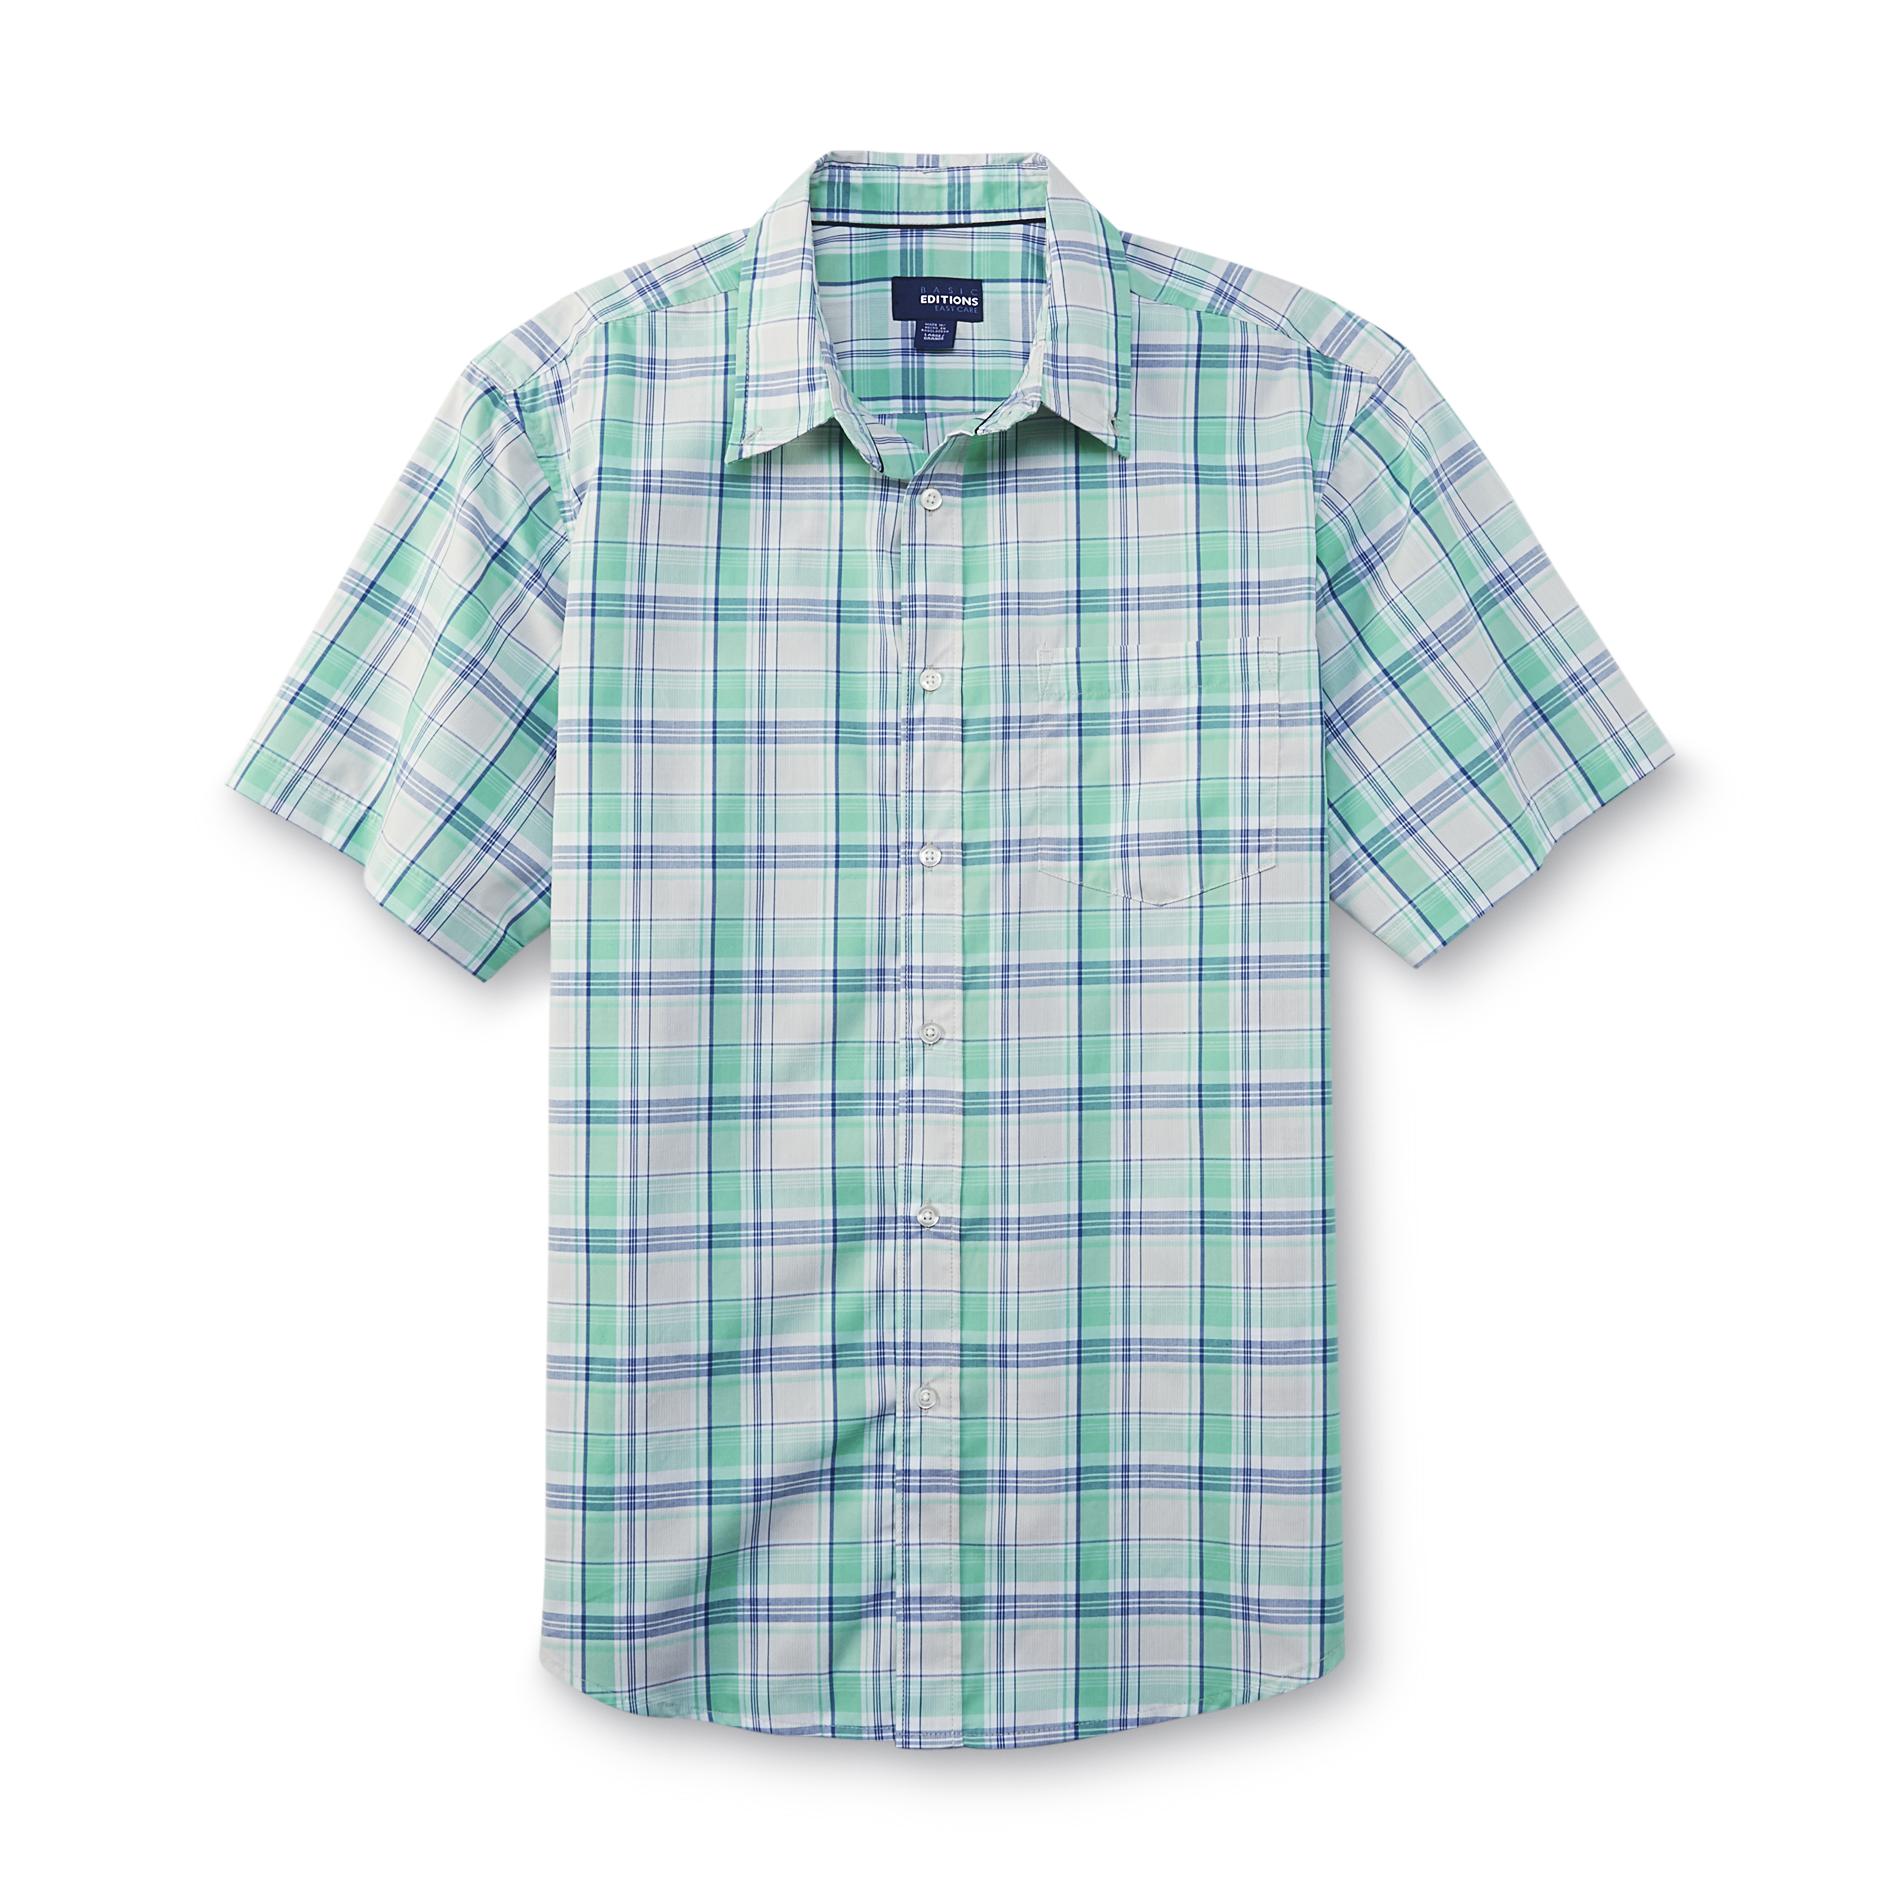 Basic Editions Men's Easy Care Short-Sleeve Shirt - Plaid